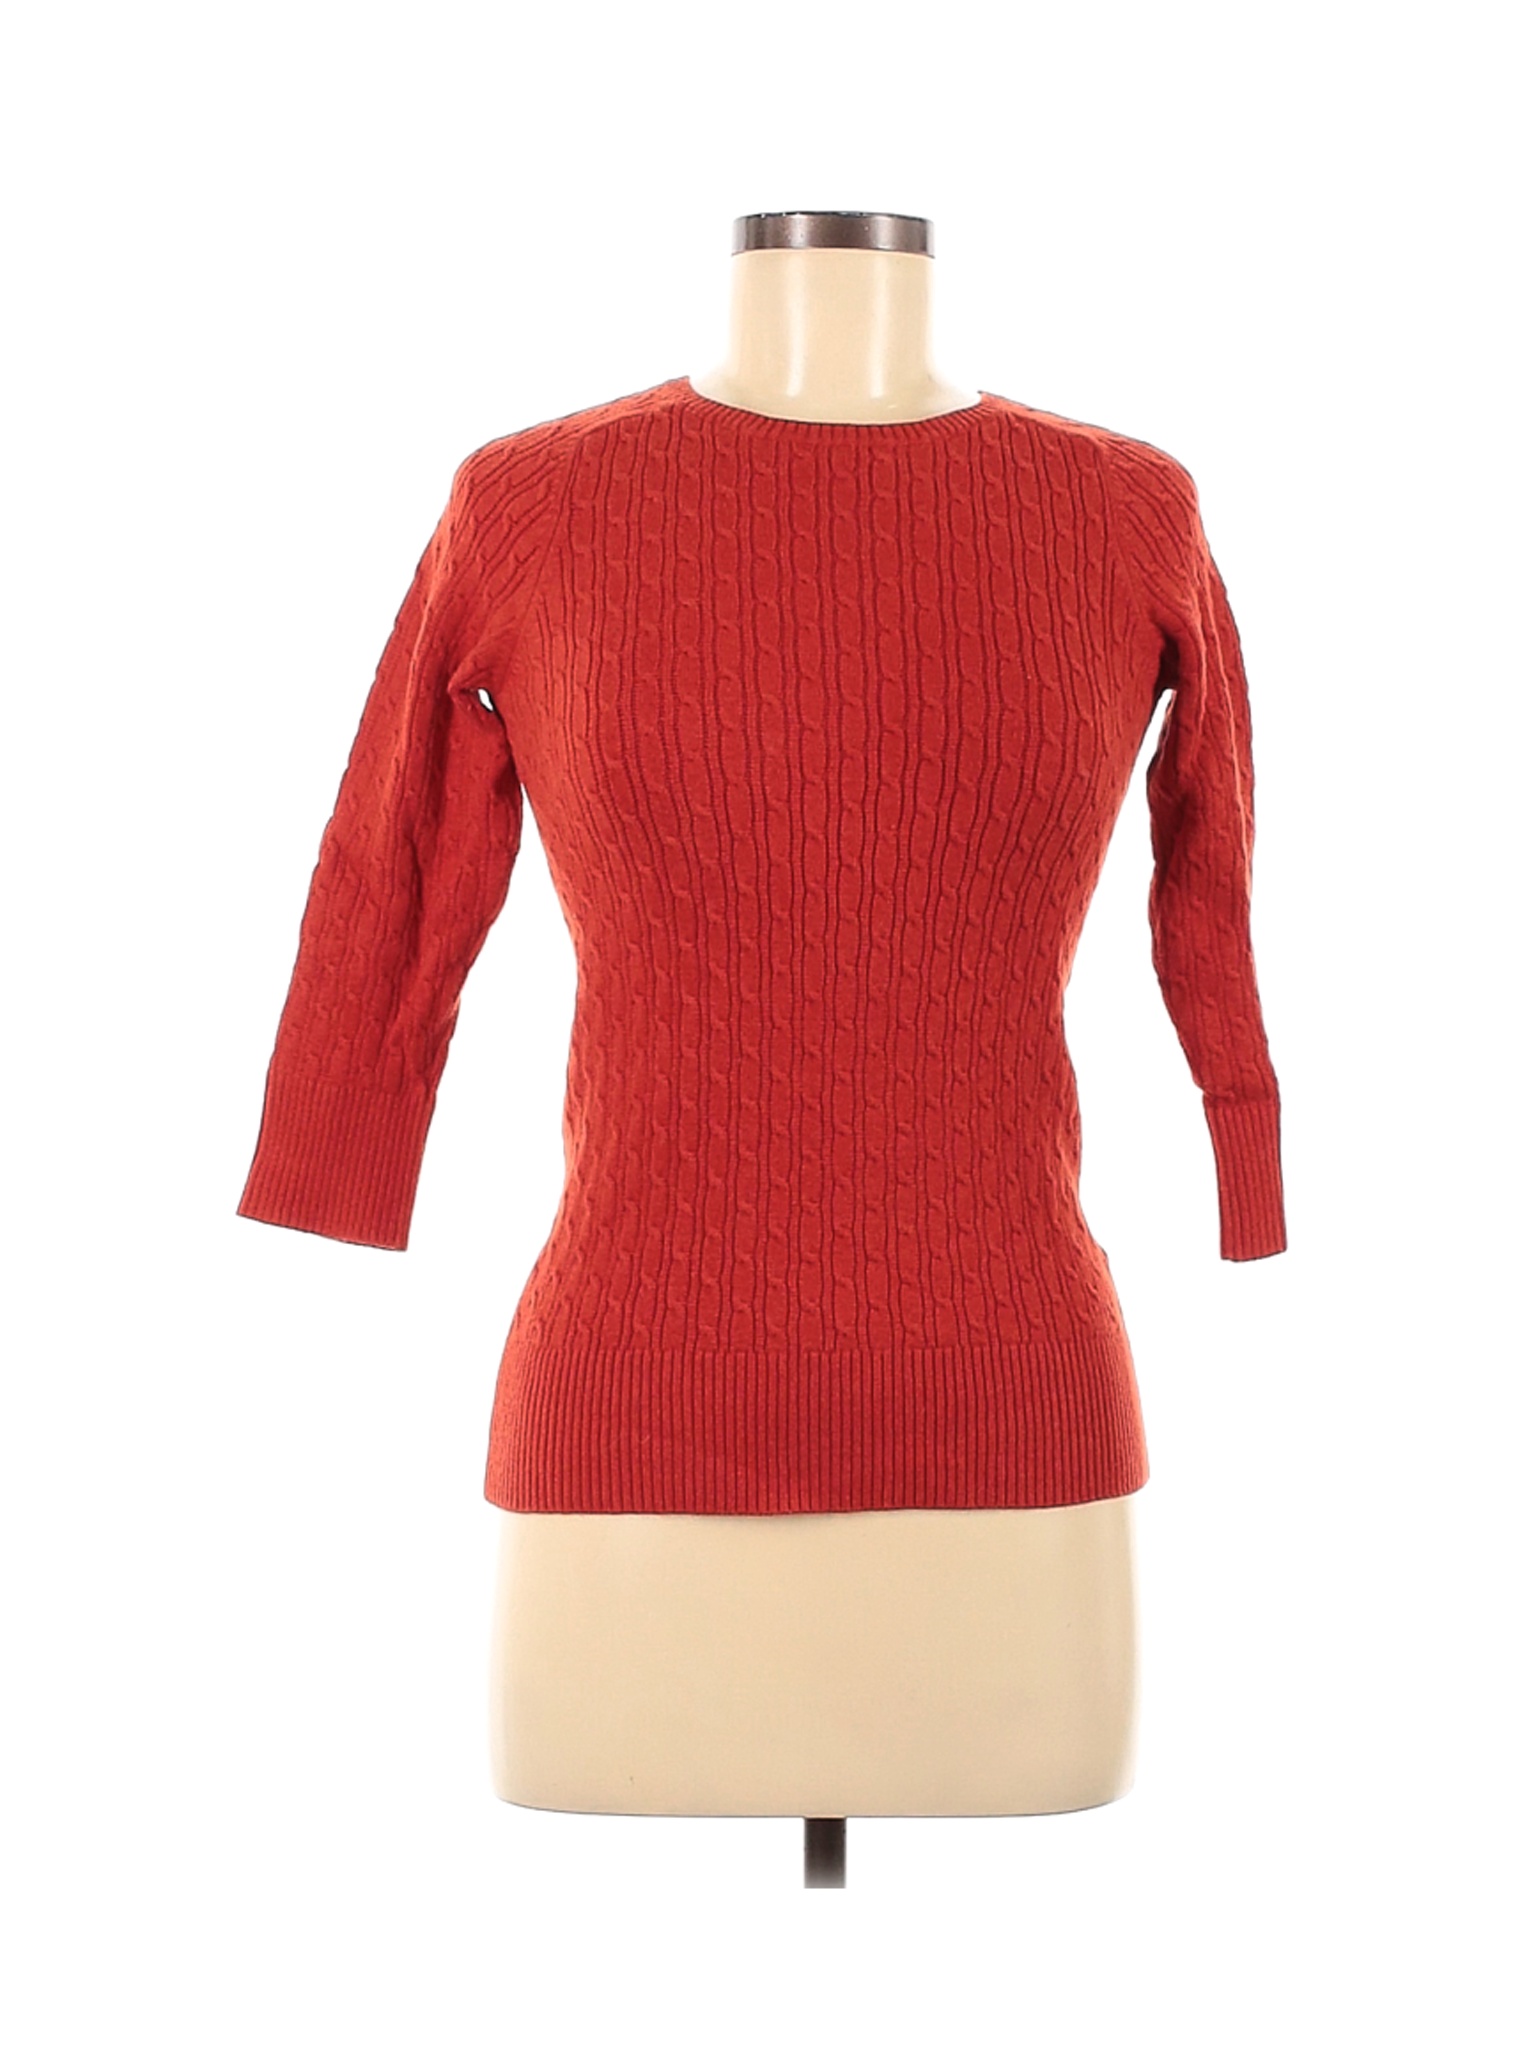 Gap Women Red Pullover Sweater M | eBay